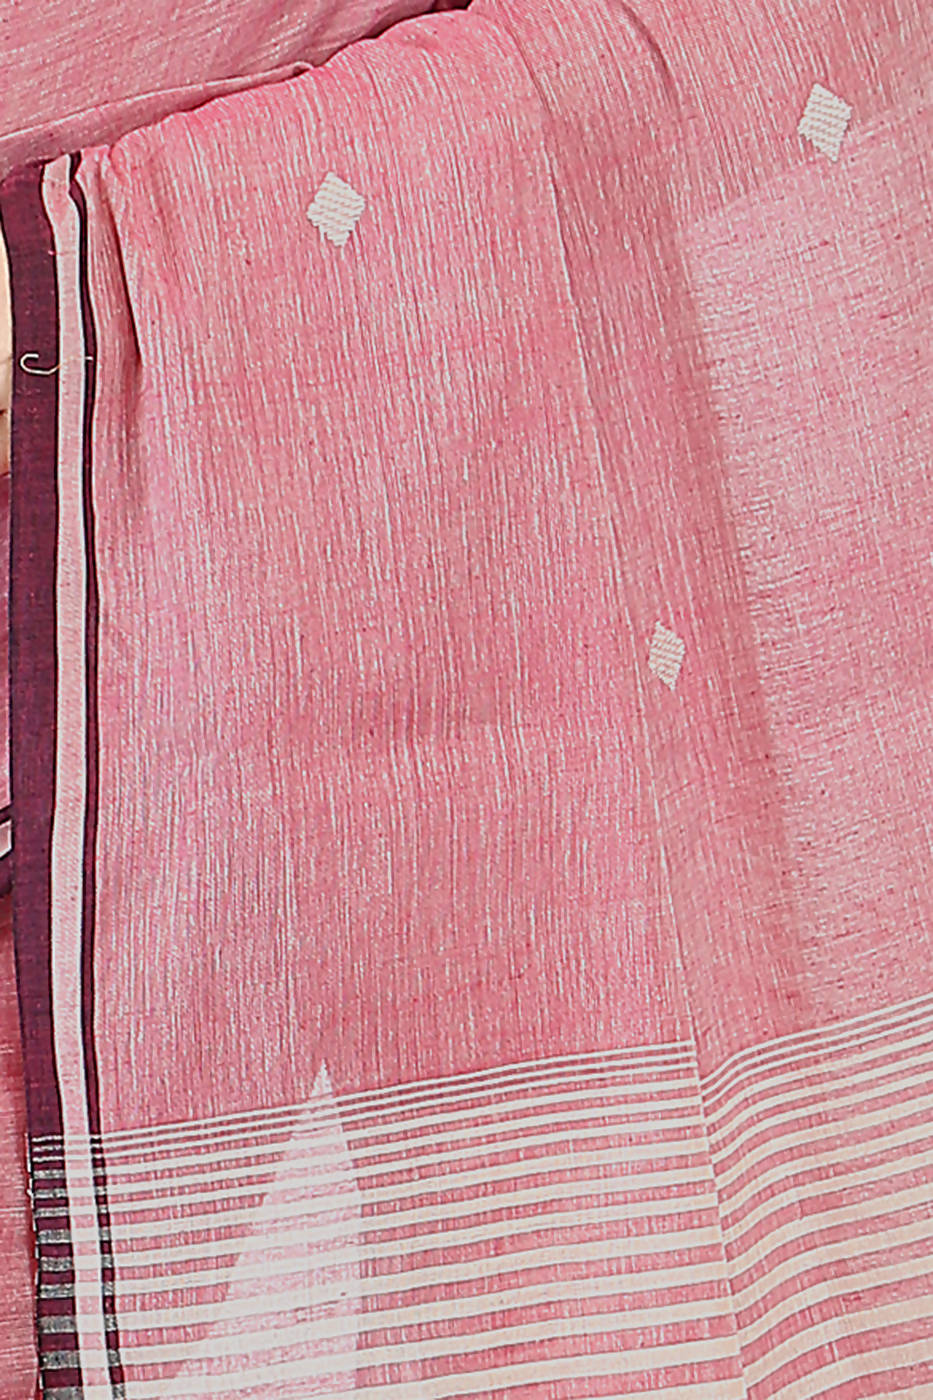 Handloom bengal baby pink cotton saree